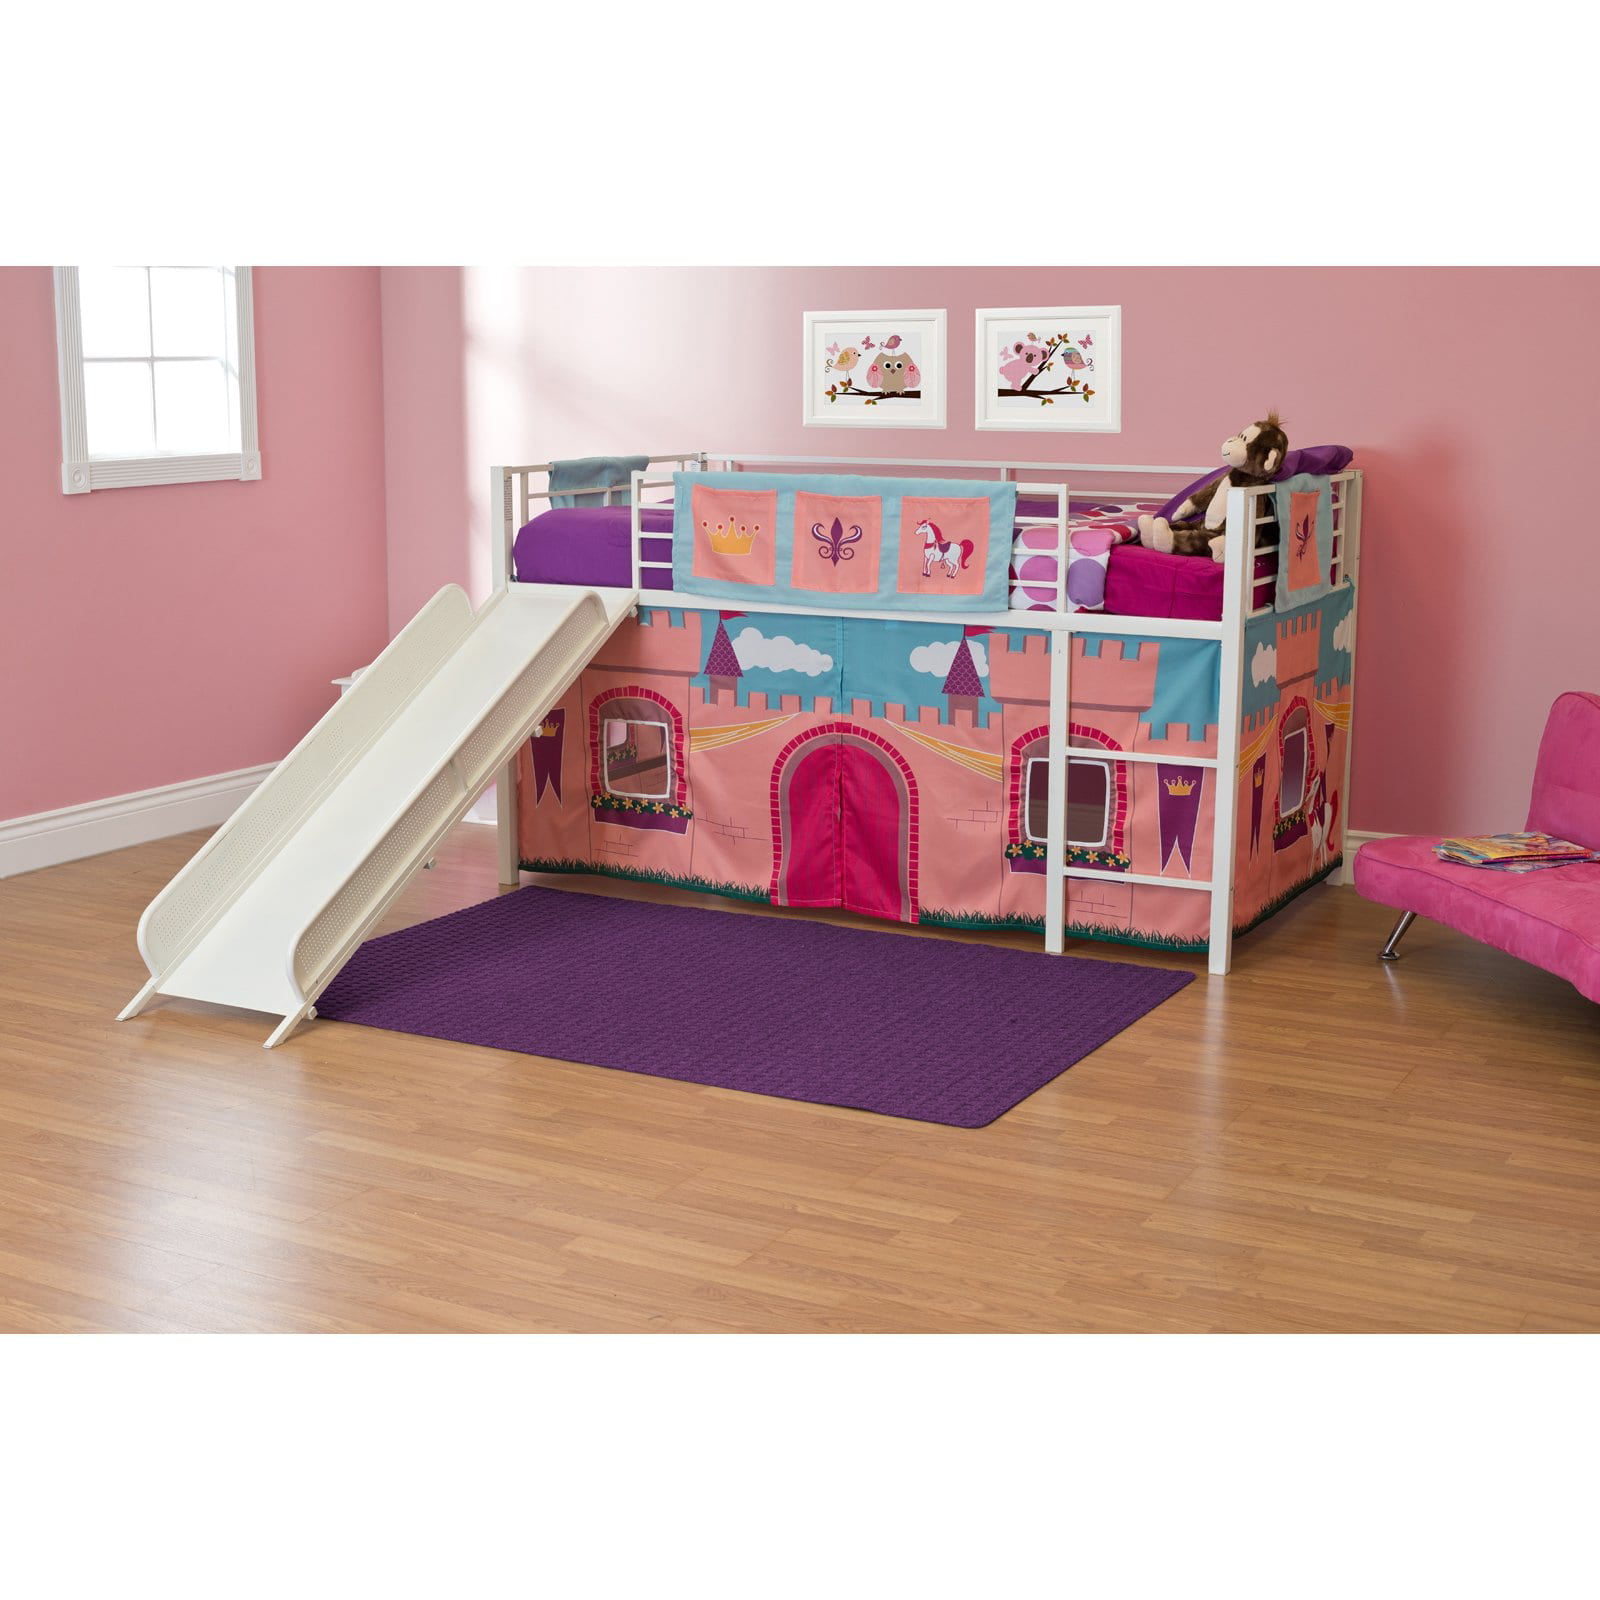 Princess Castle Junior Fantasy Loft, Princess Castle Bunk Bed With Slide